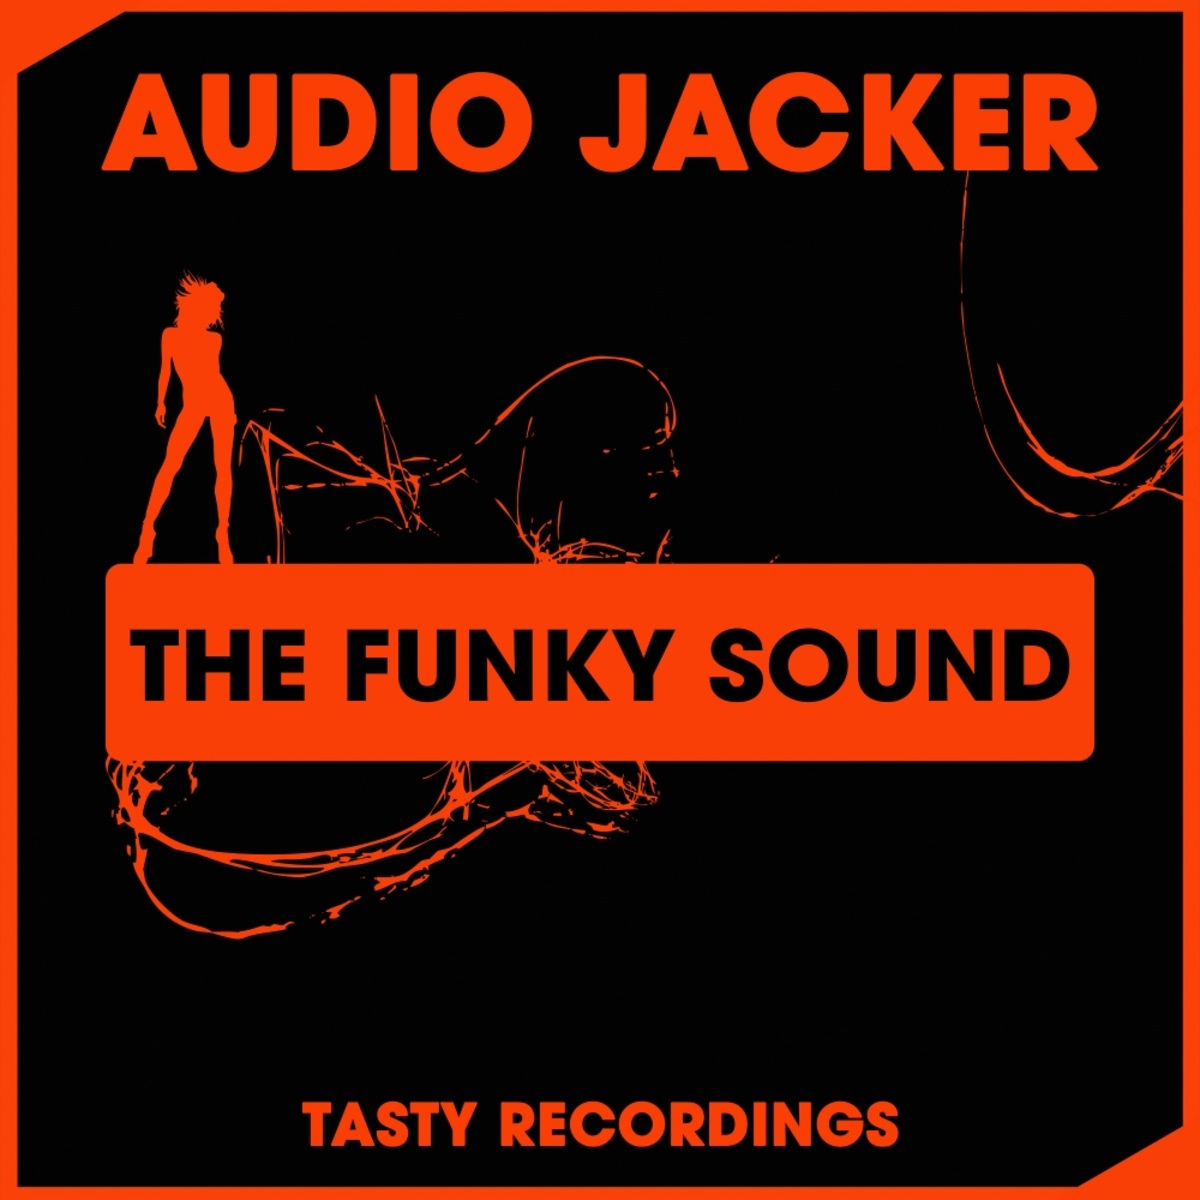 Audio Jacker - The Funky Sound / Tasty Recordings